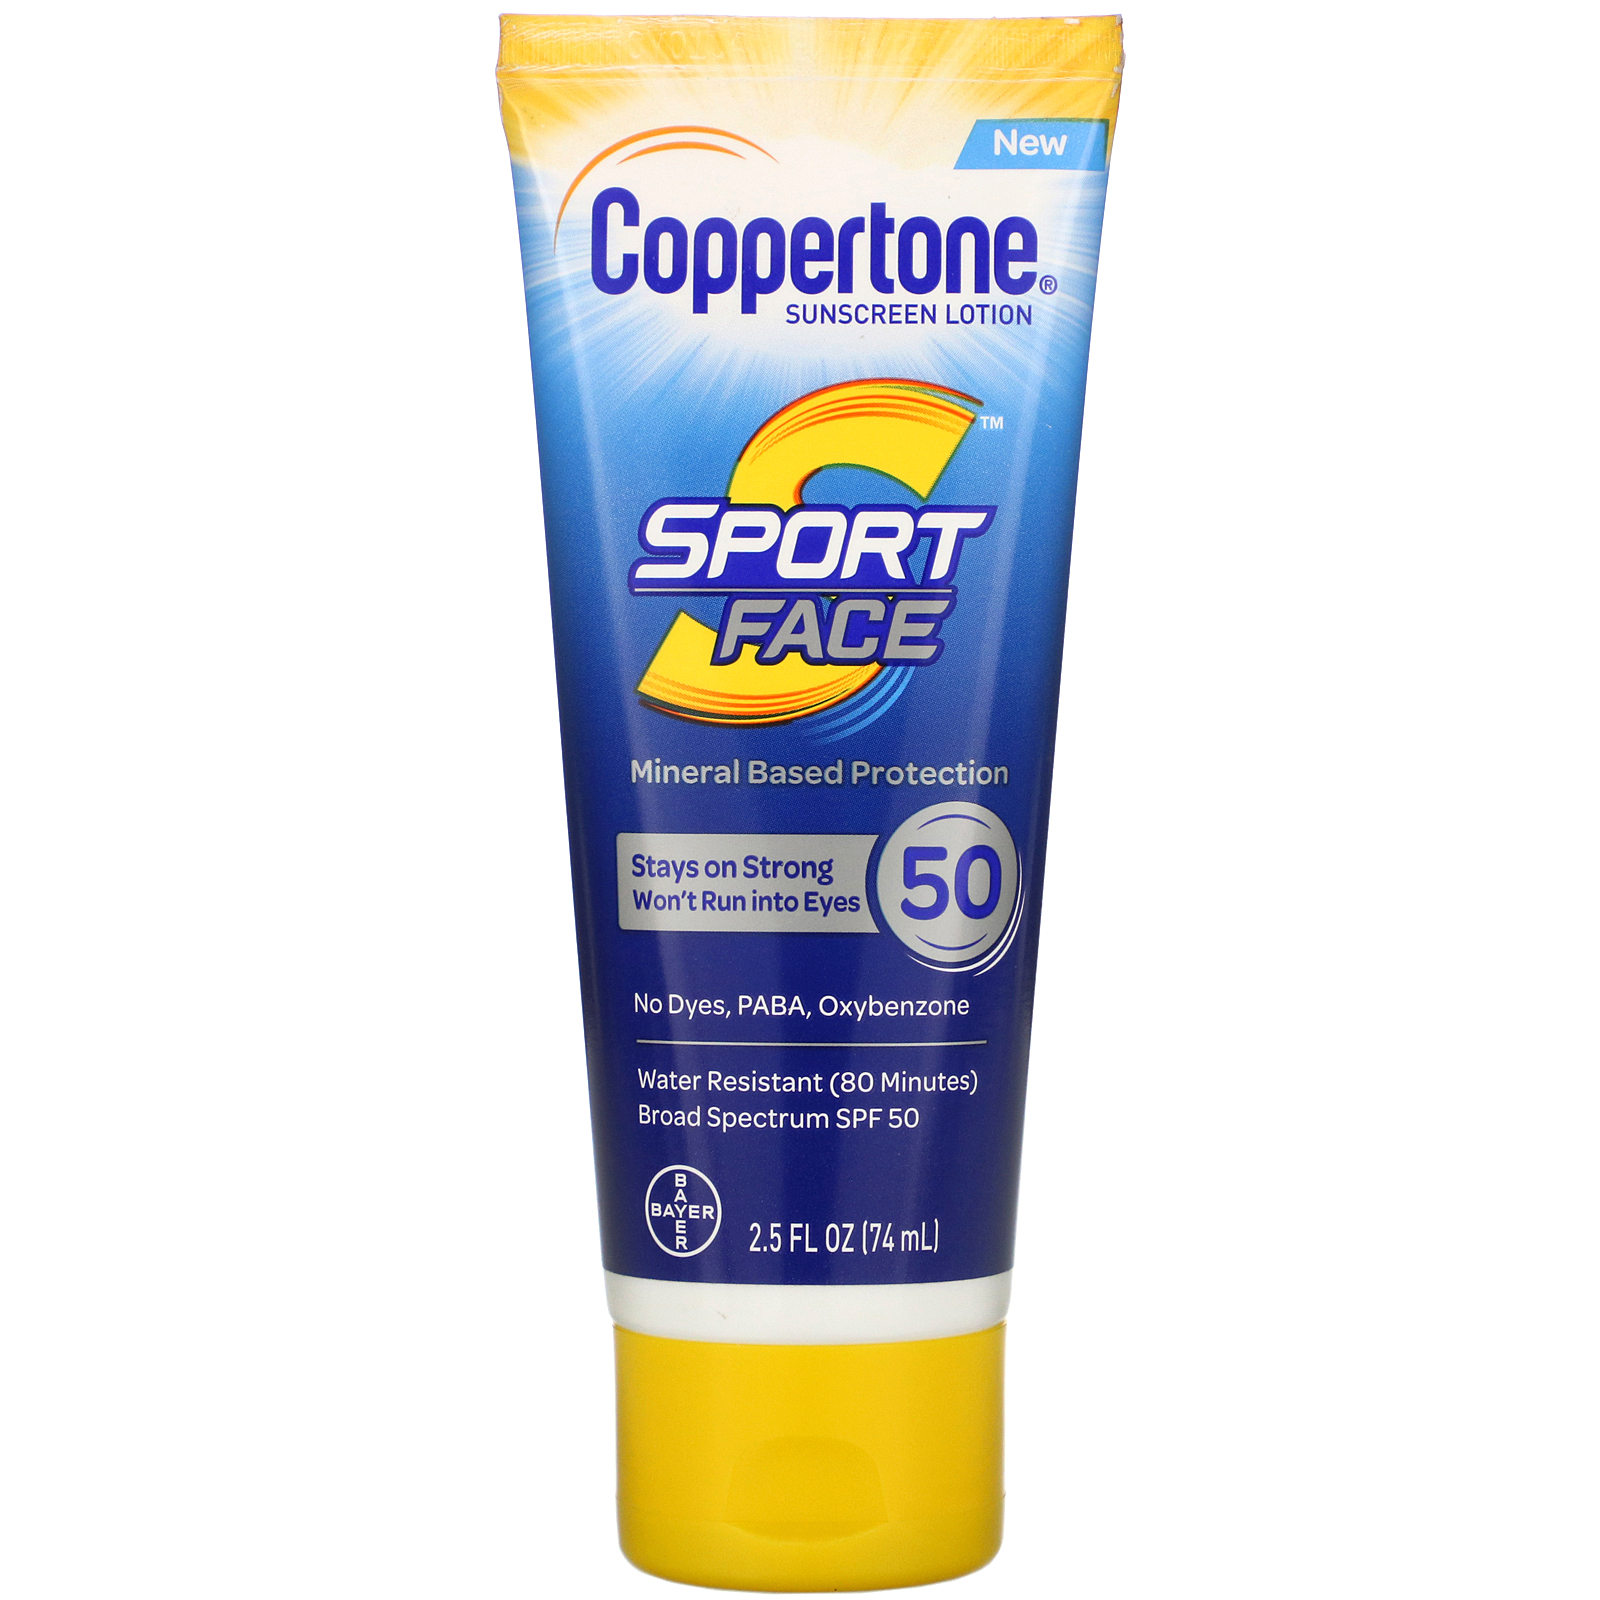 Coppertone, Sport Face, Sunscreen Lotion, SPF 50, 2.5 fl oz (74 ml)